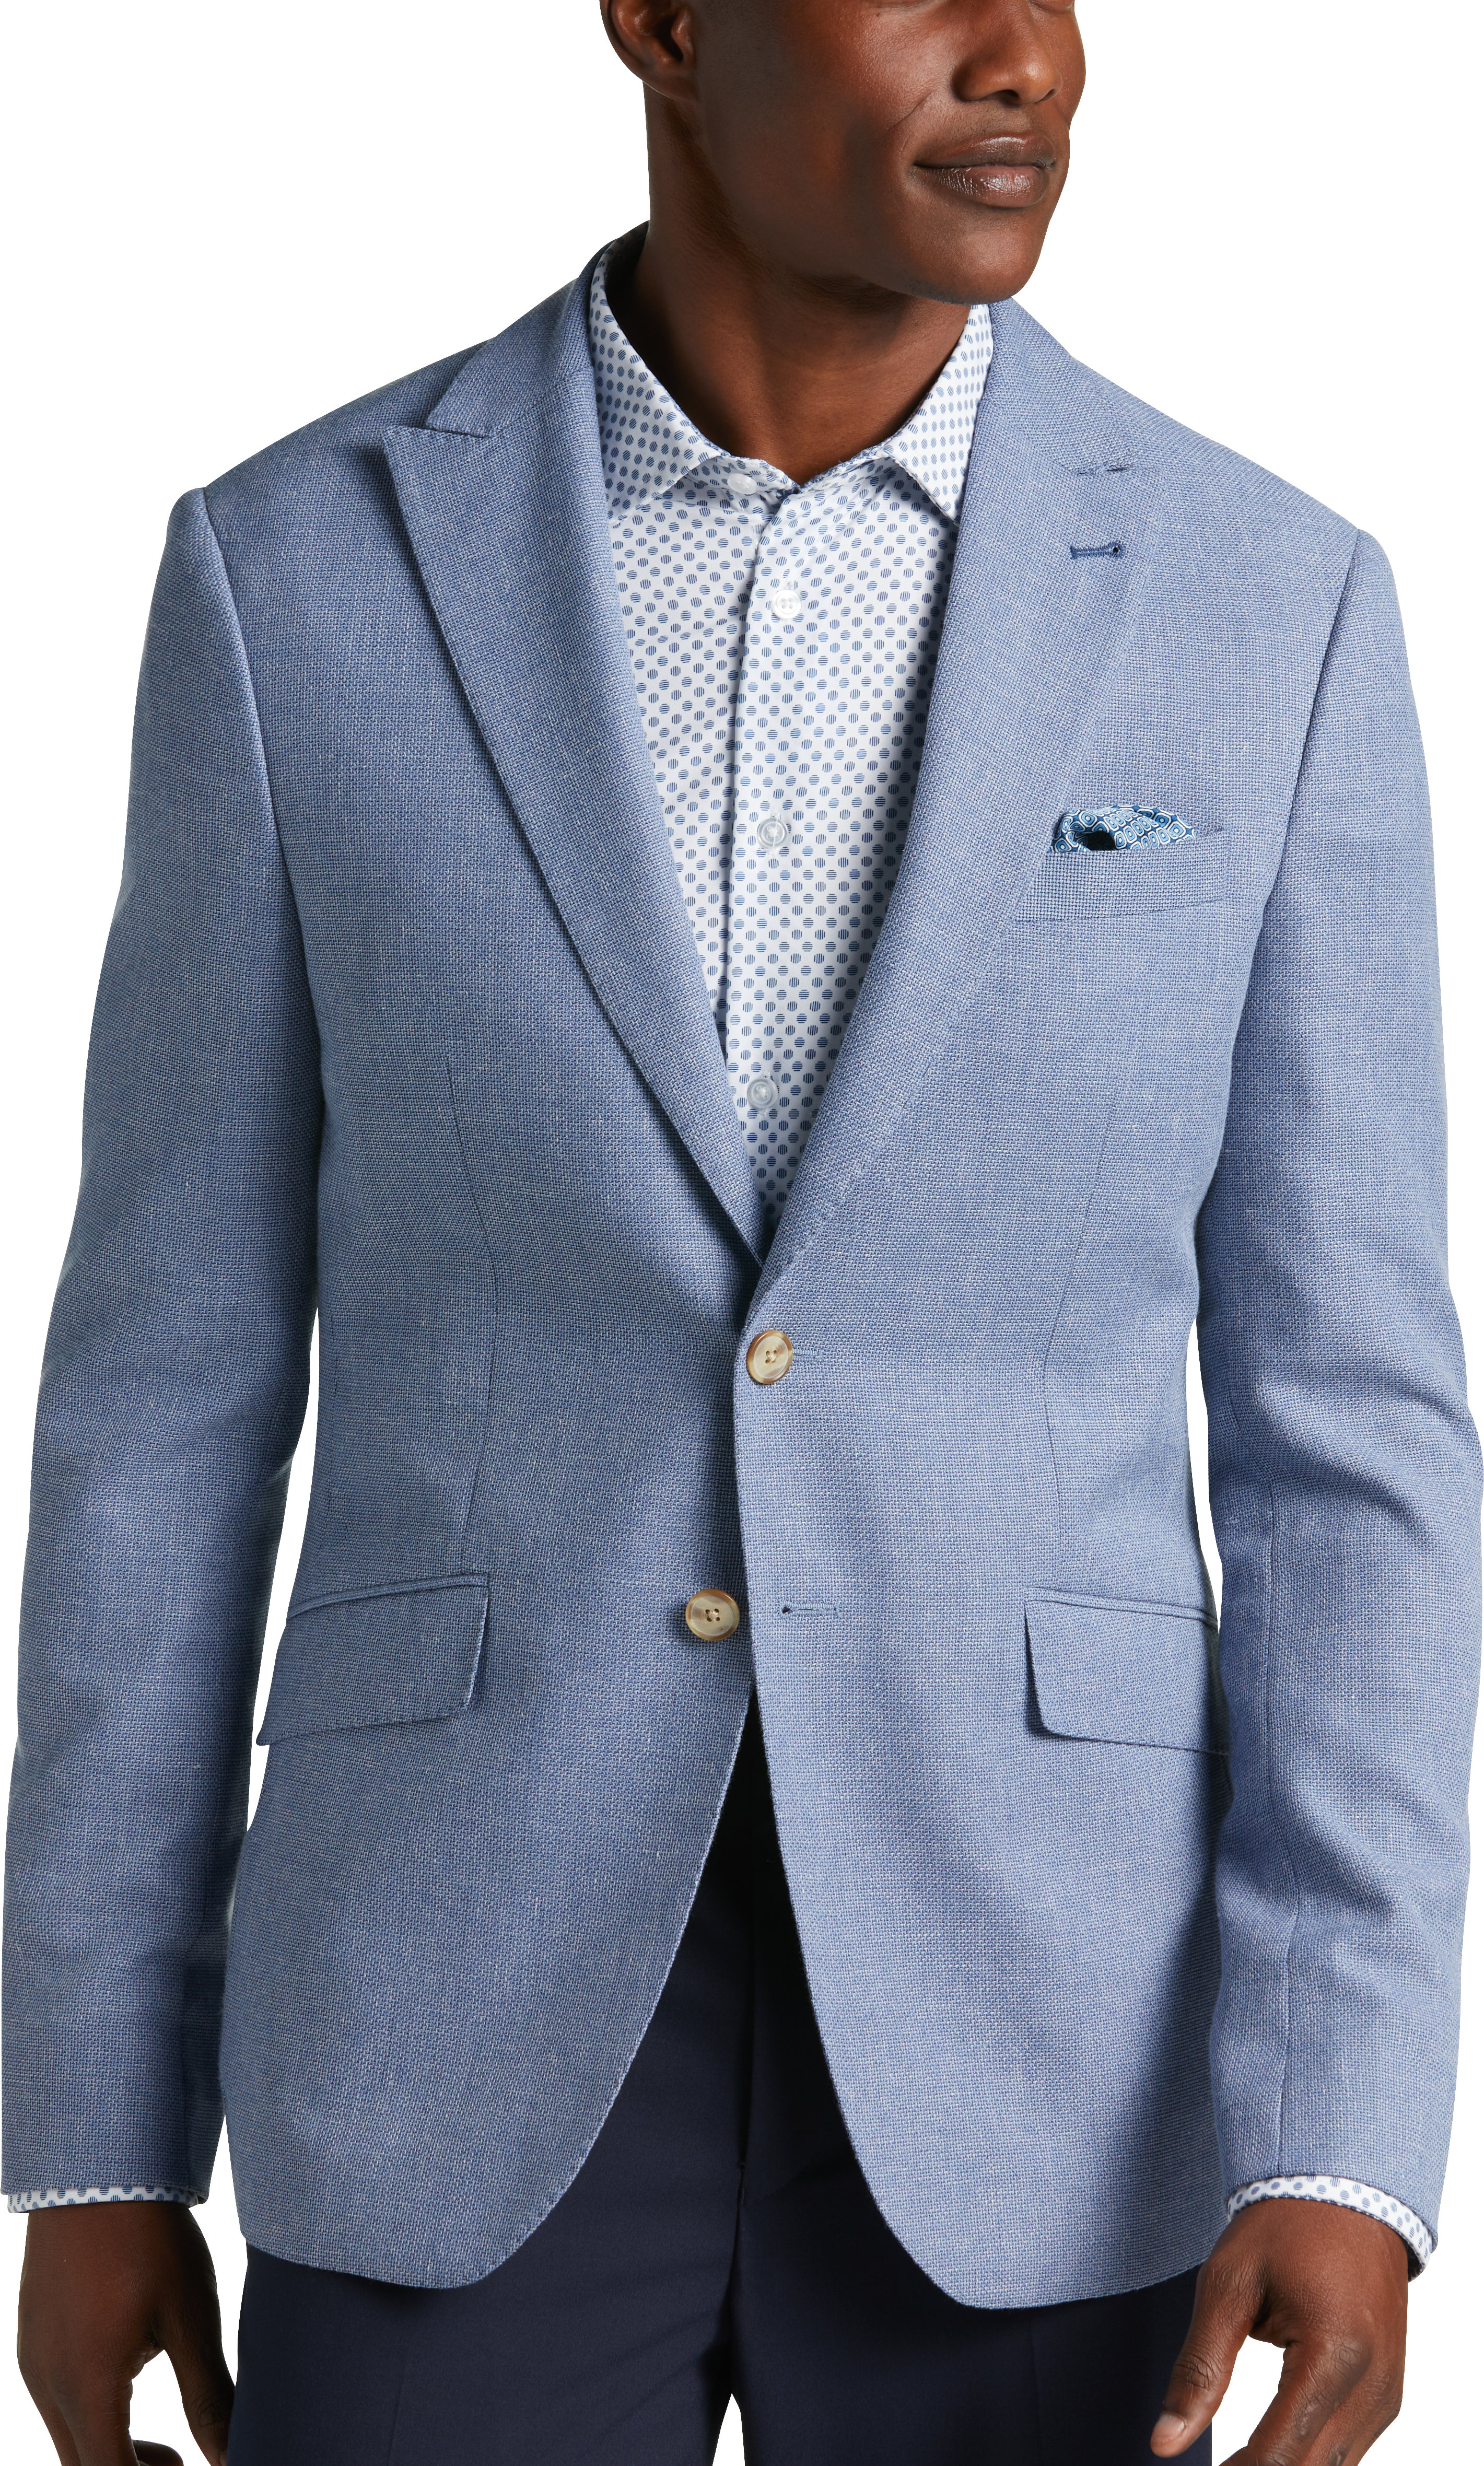 JOE Joseph Abboud Slim Fit Sport Coat, Light Blue - Men's Sale | Men's ...